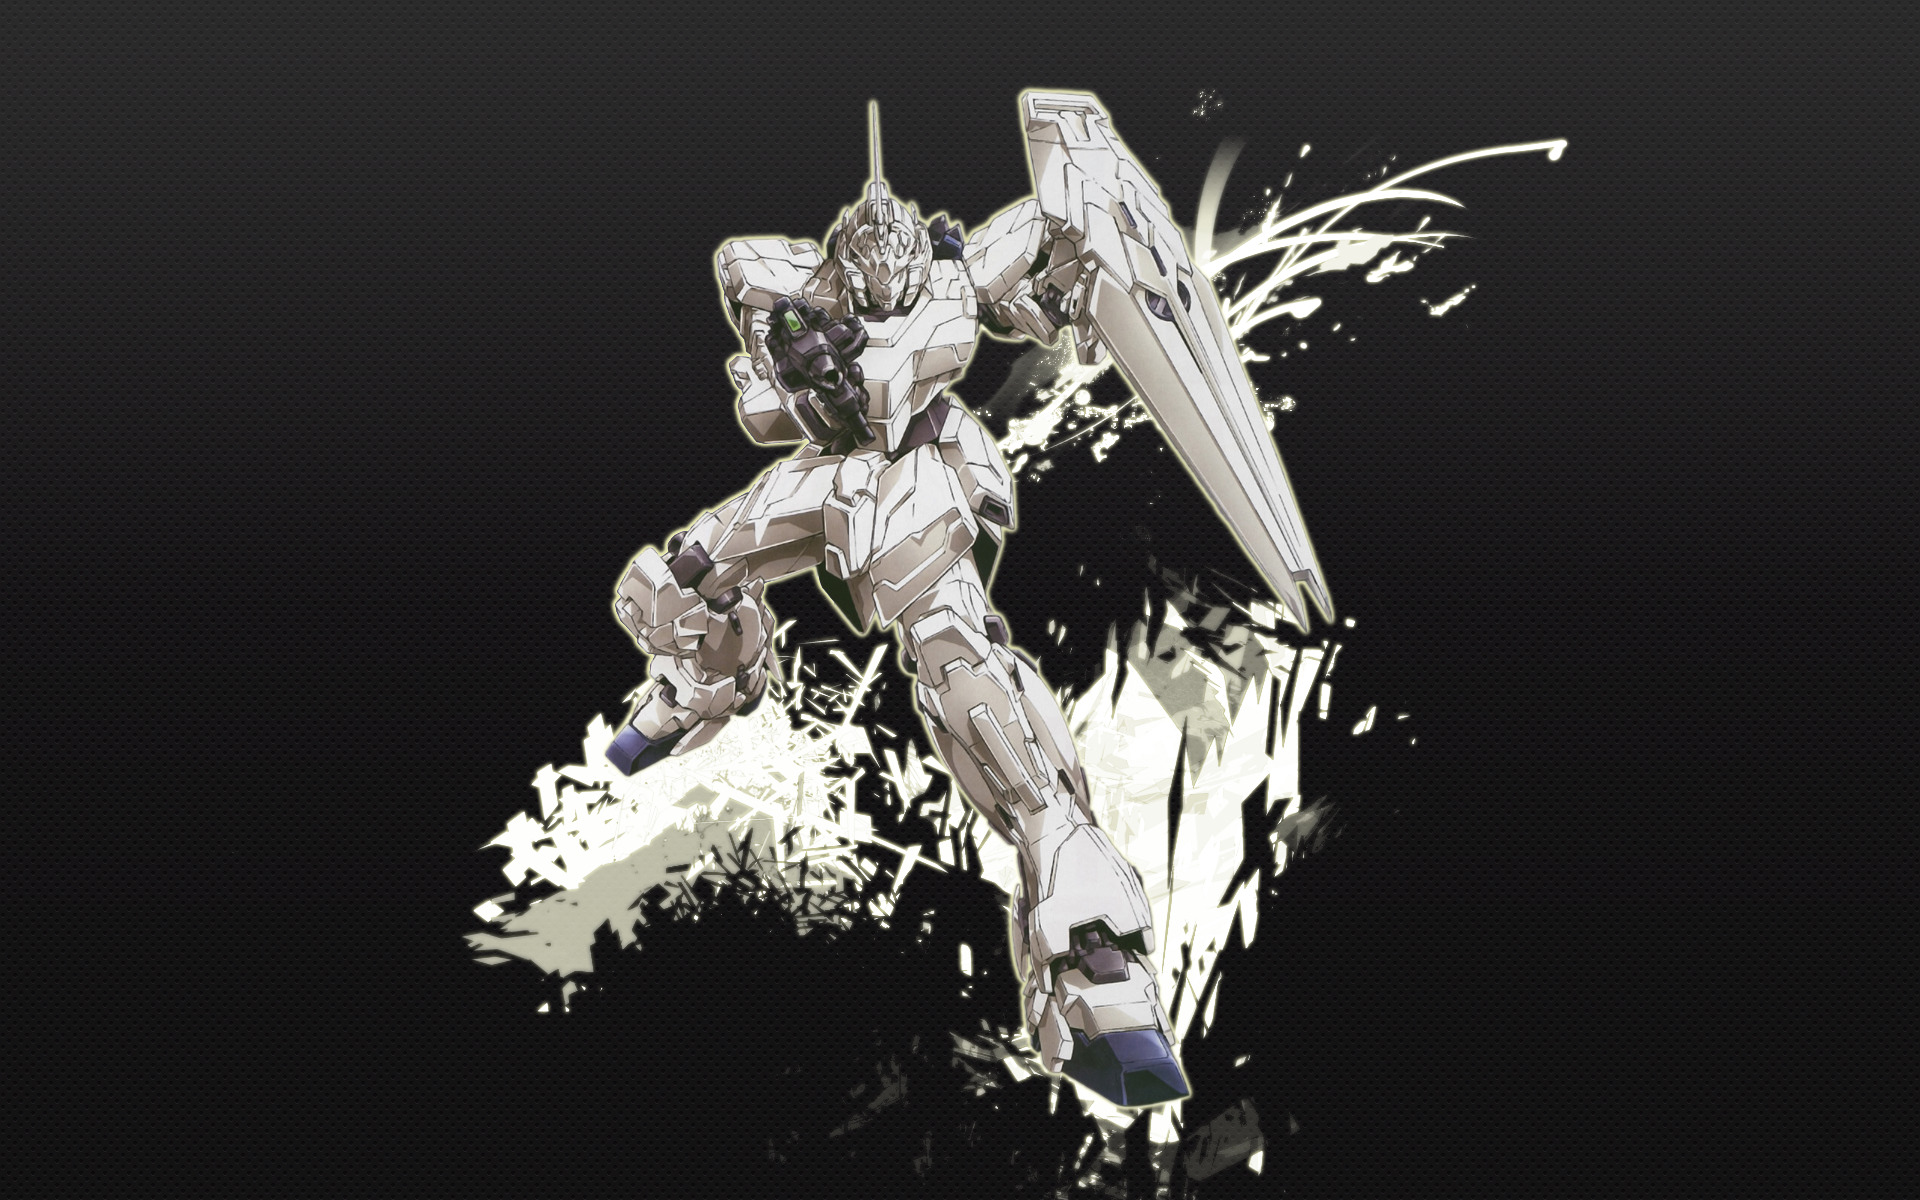 Gundam Anime Mobile Suit Gundam Unicorn Rx 0 Unicorn Gundam Mech Wallpapers Hd Desktop And Mobile Backgrounds